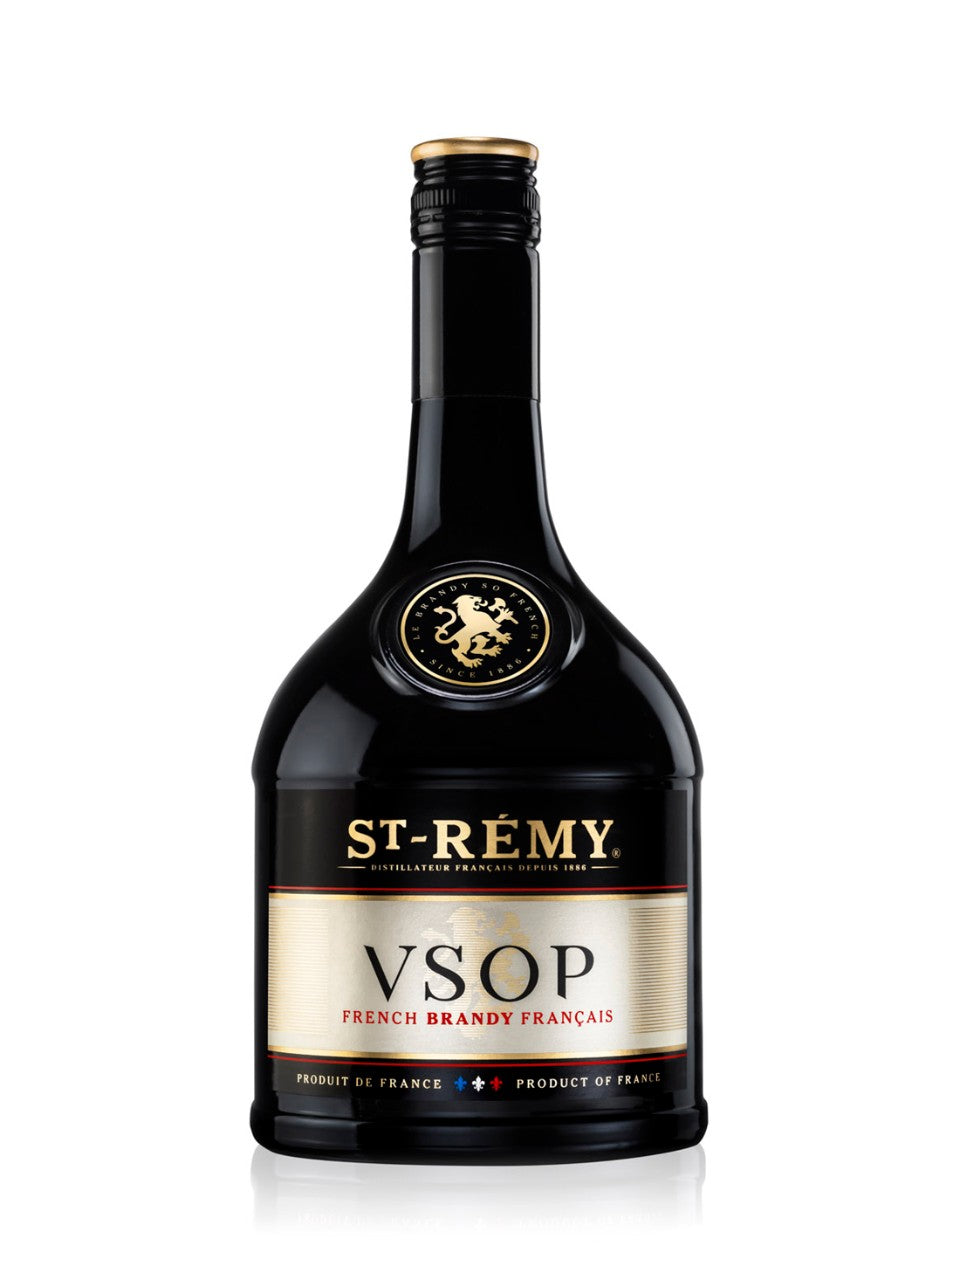 St Remy VSOP Brandy 750 mL bottle